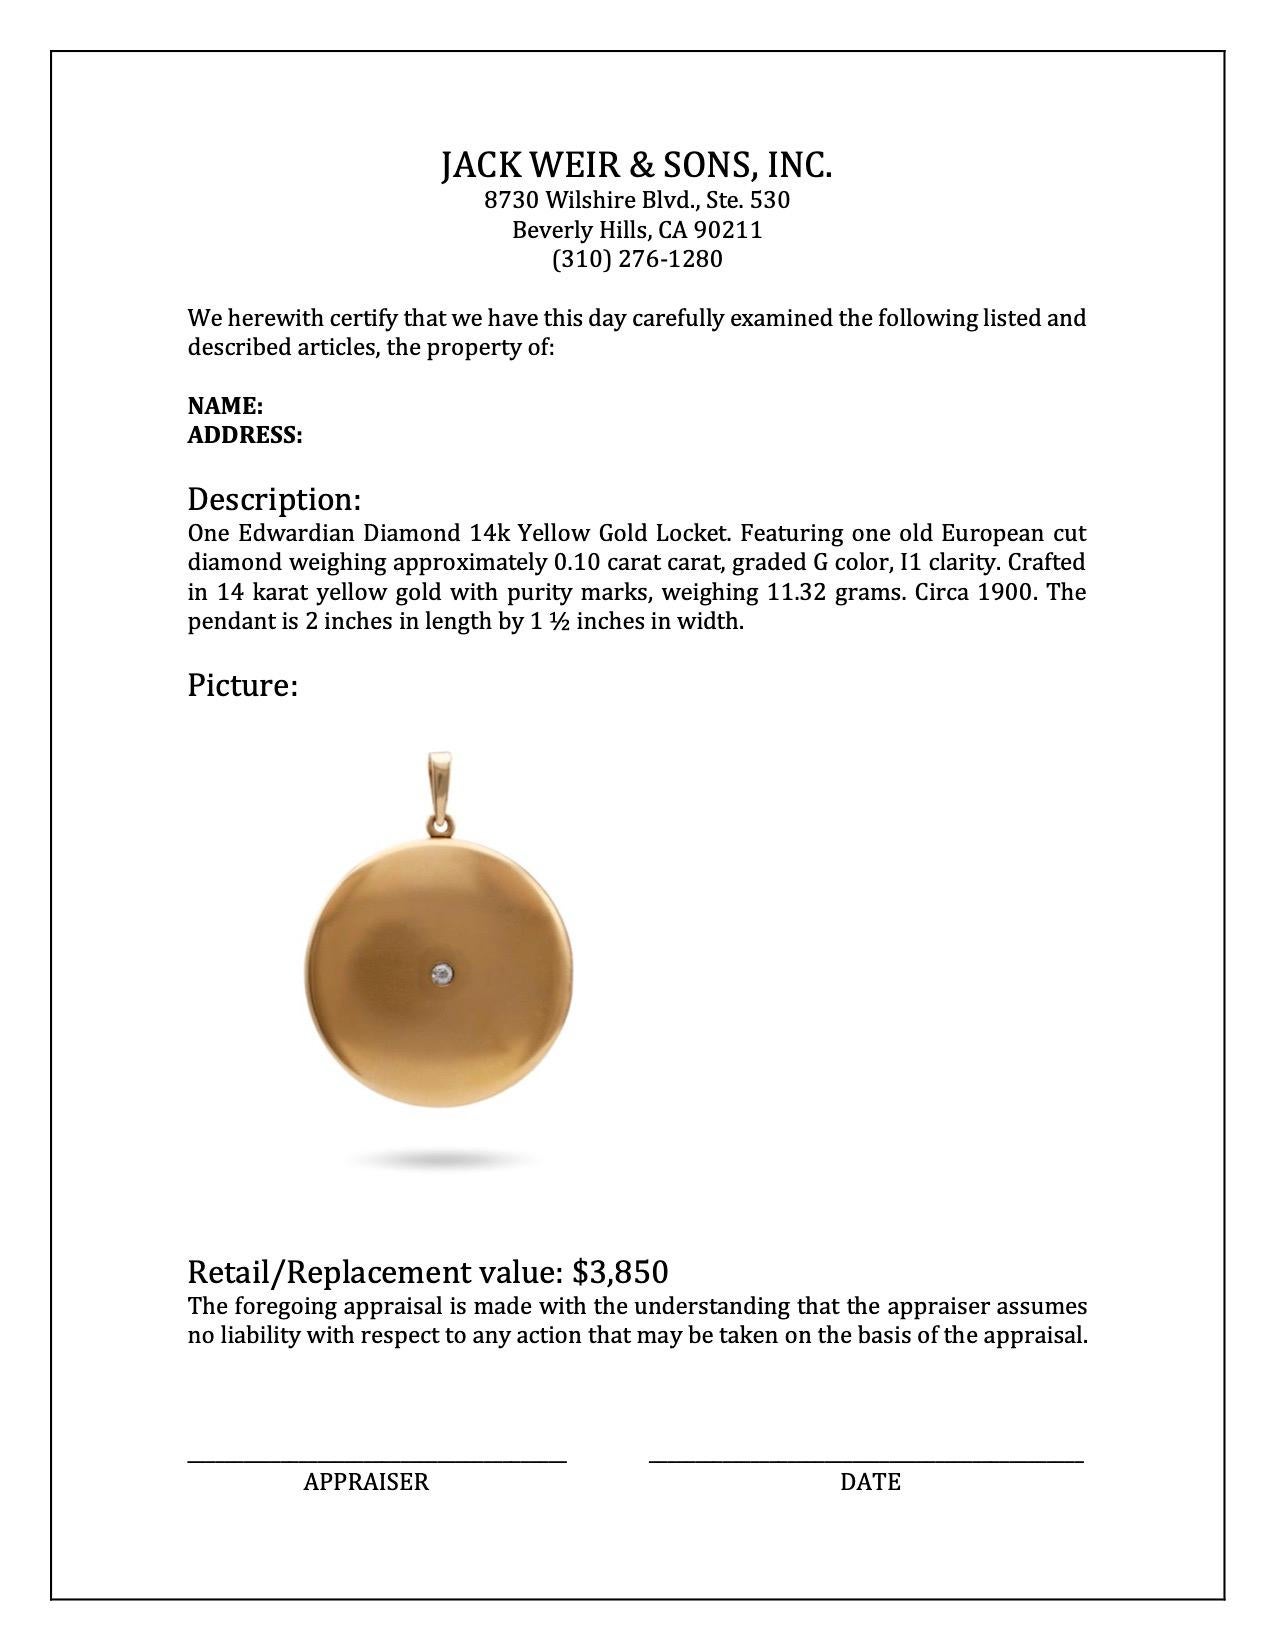 Women's or Men's Edwardian Diamond 14k Yellow Gold Locket For Sale